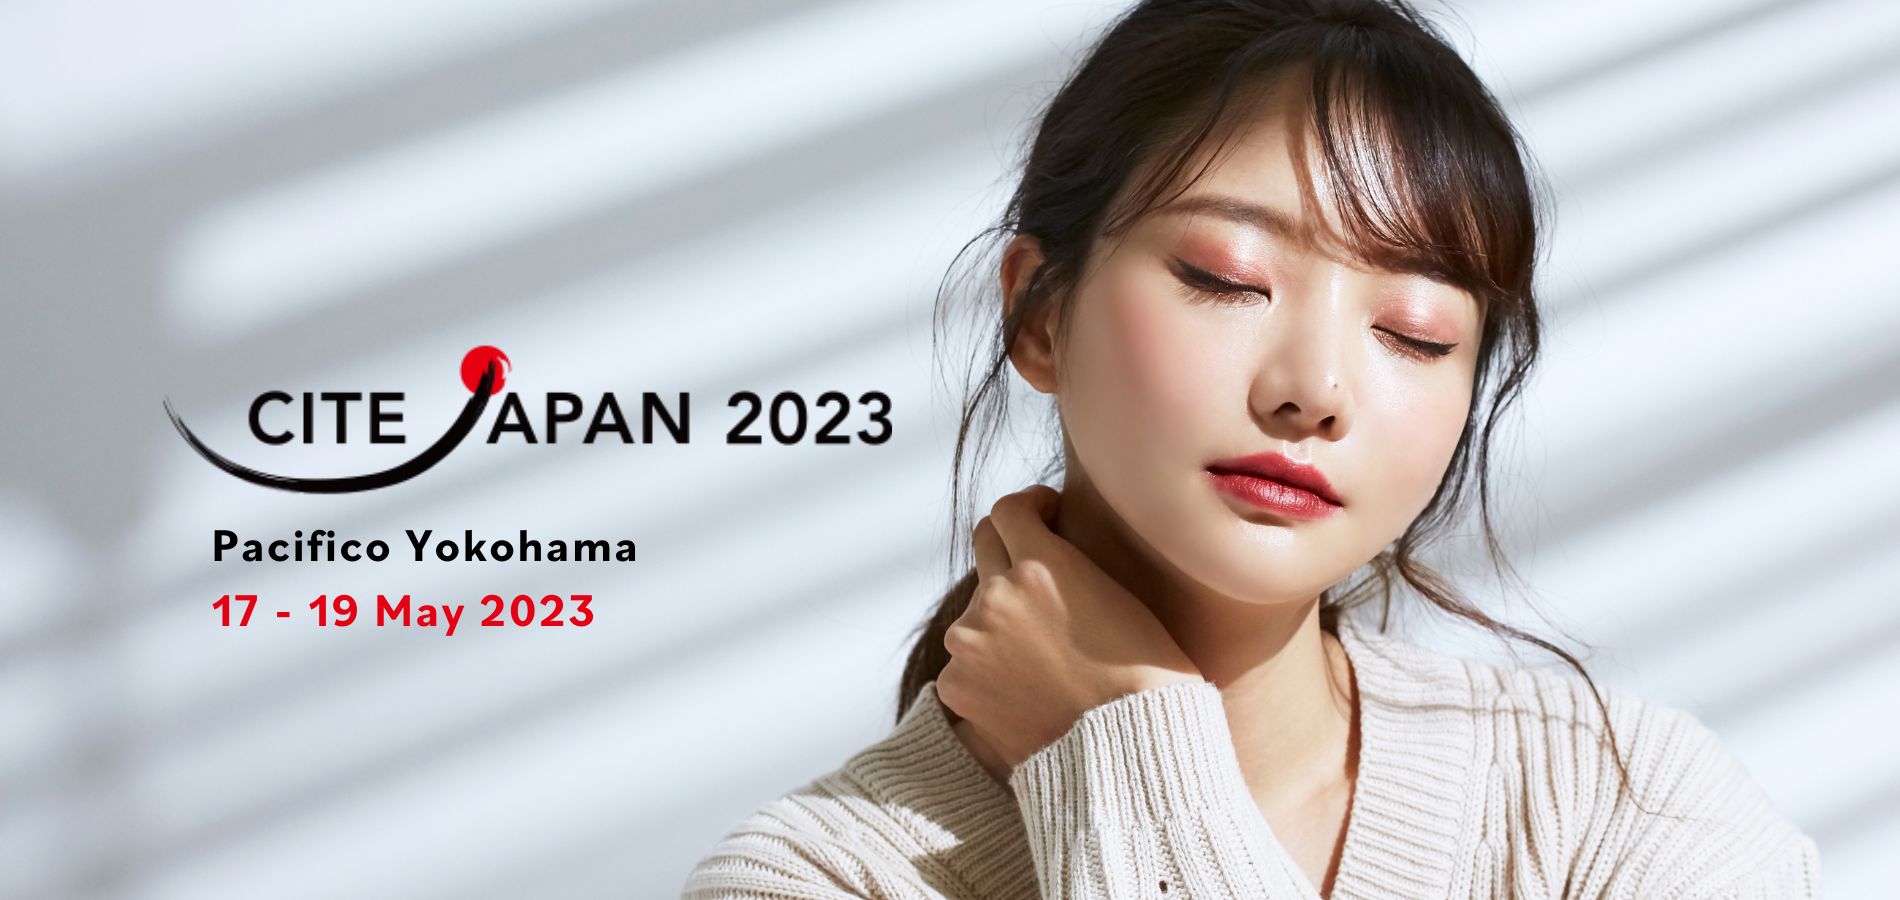 CITE Japan 2023 Website Titelbild